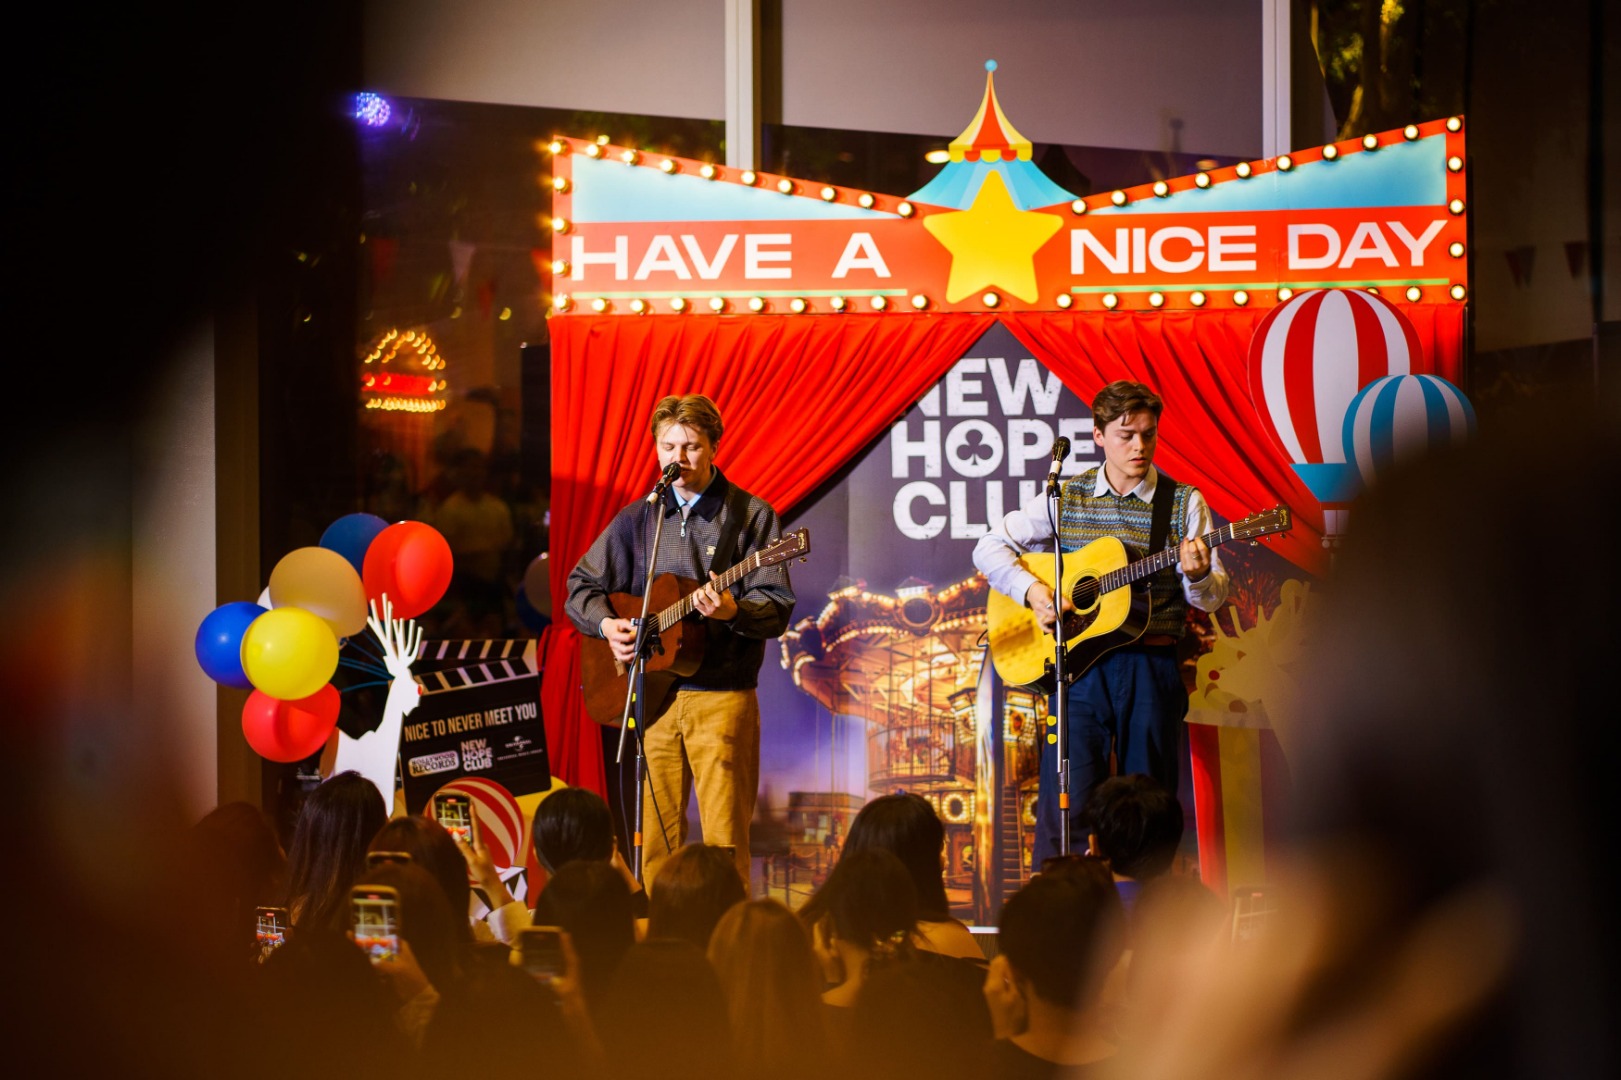 New Hope Club - Nice To Never Meet You